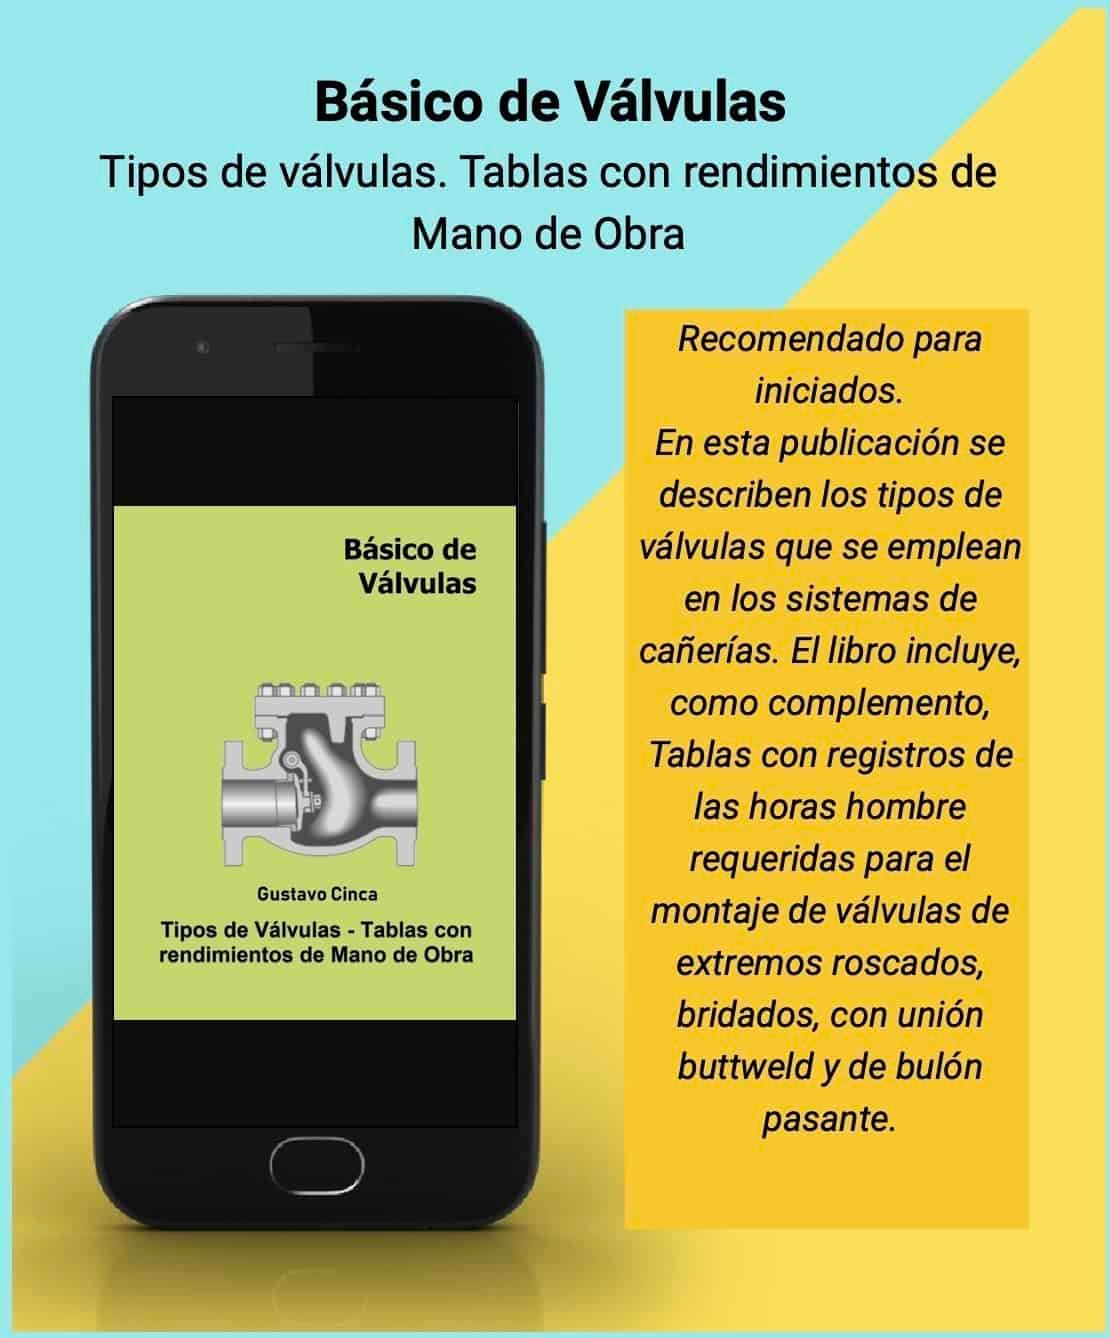 The figure displays a booklet with the cover and a brief description of the book: Básico de Válvulas